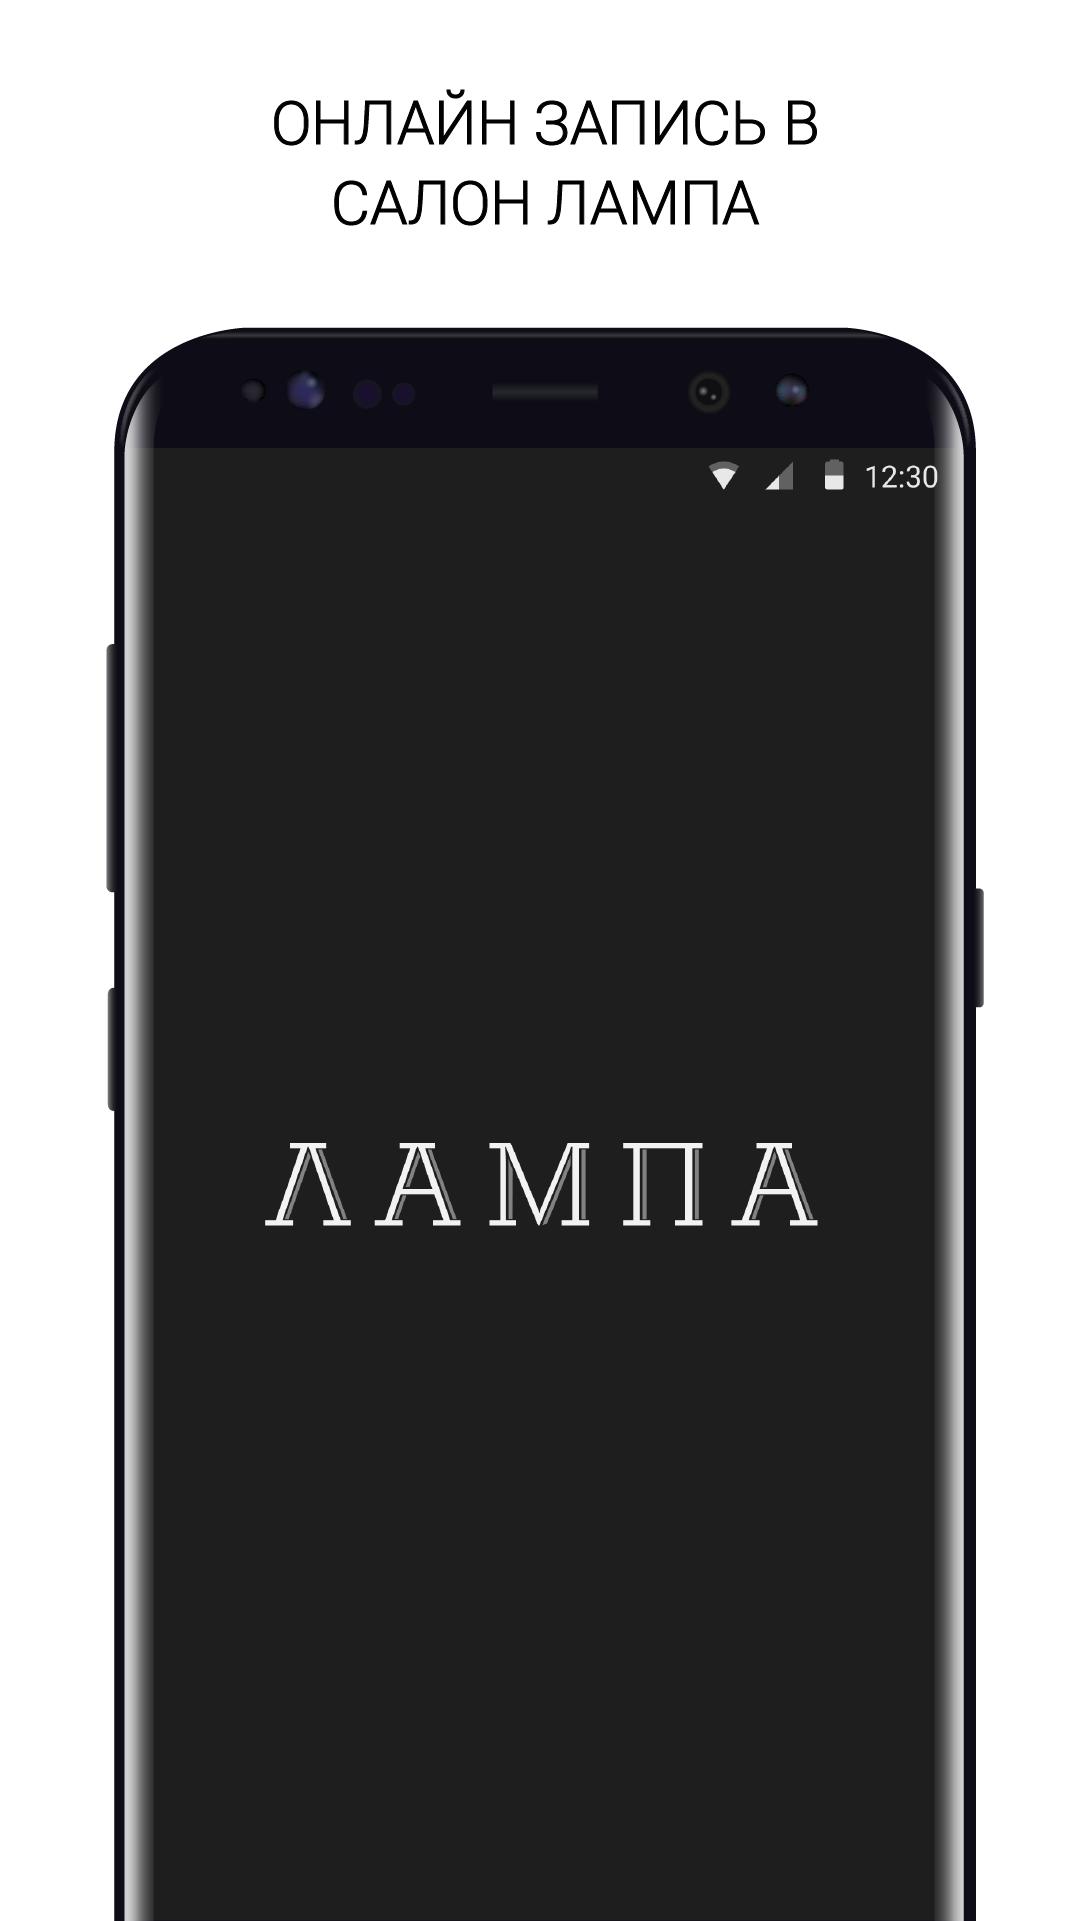 Lampa apk 4pda android. Приложение лампа для андроид.